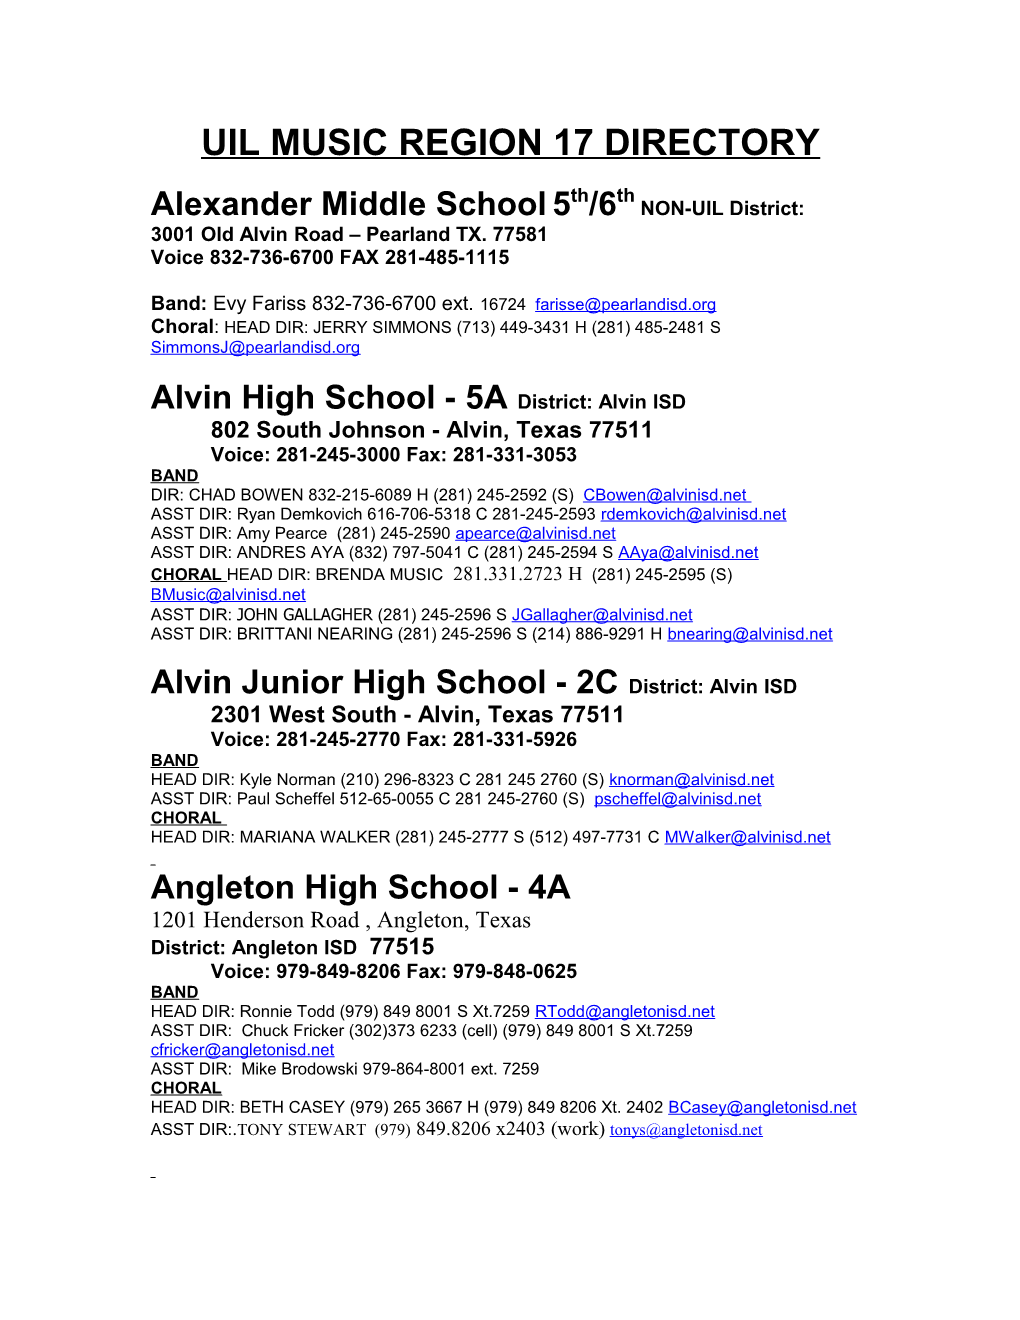 SCHOOLS - REGION XVII (Updated November 14, 2004 - 9:30 Am)